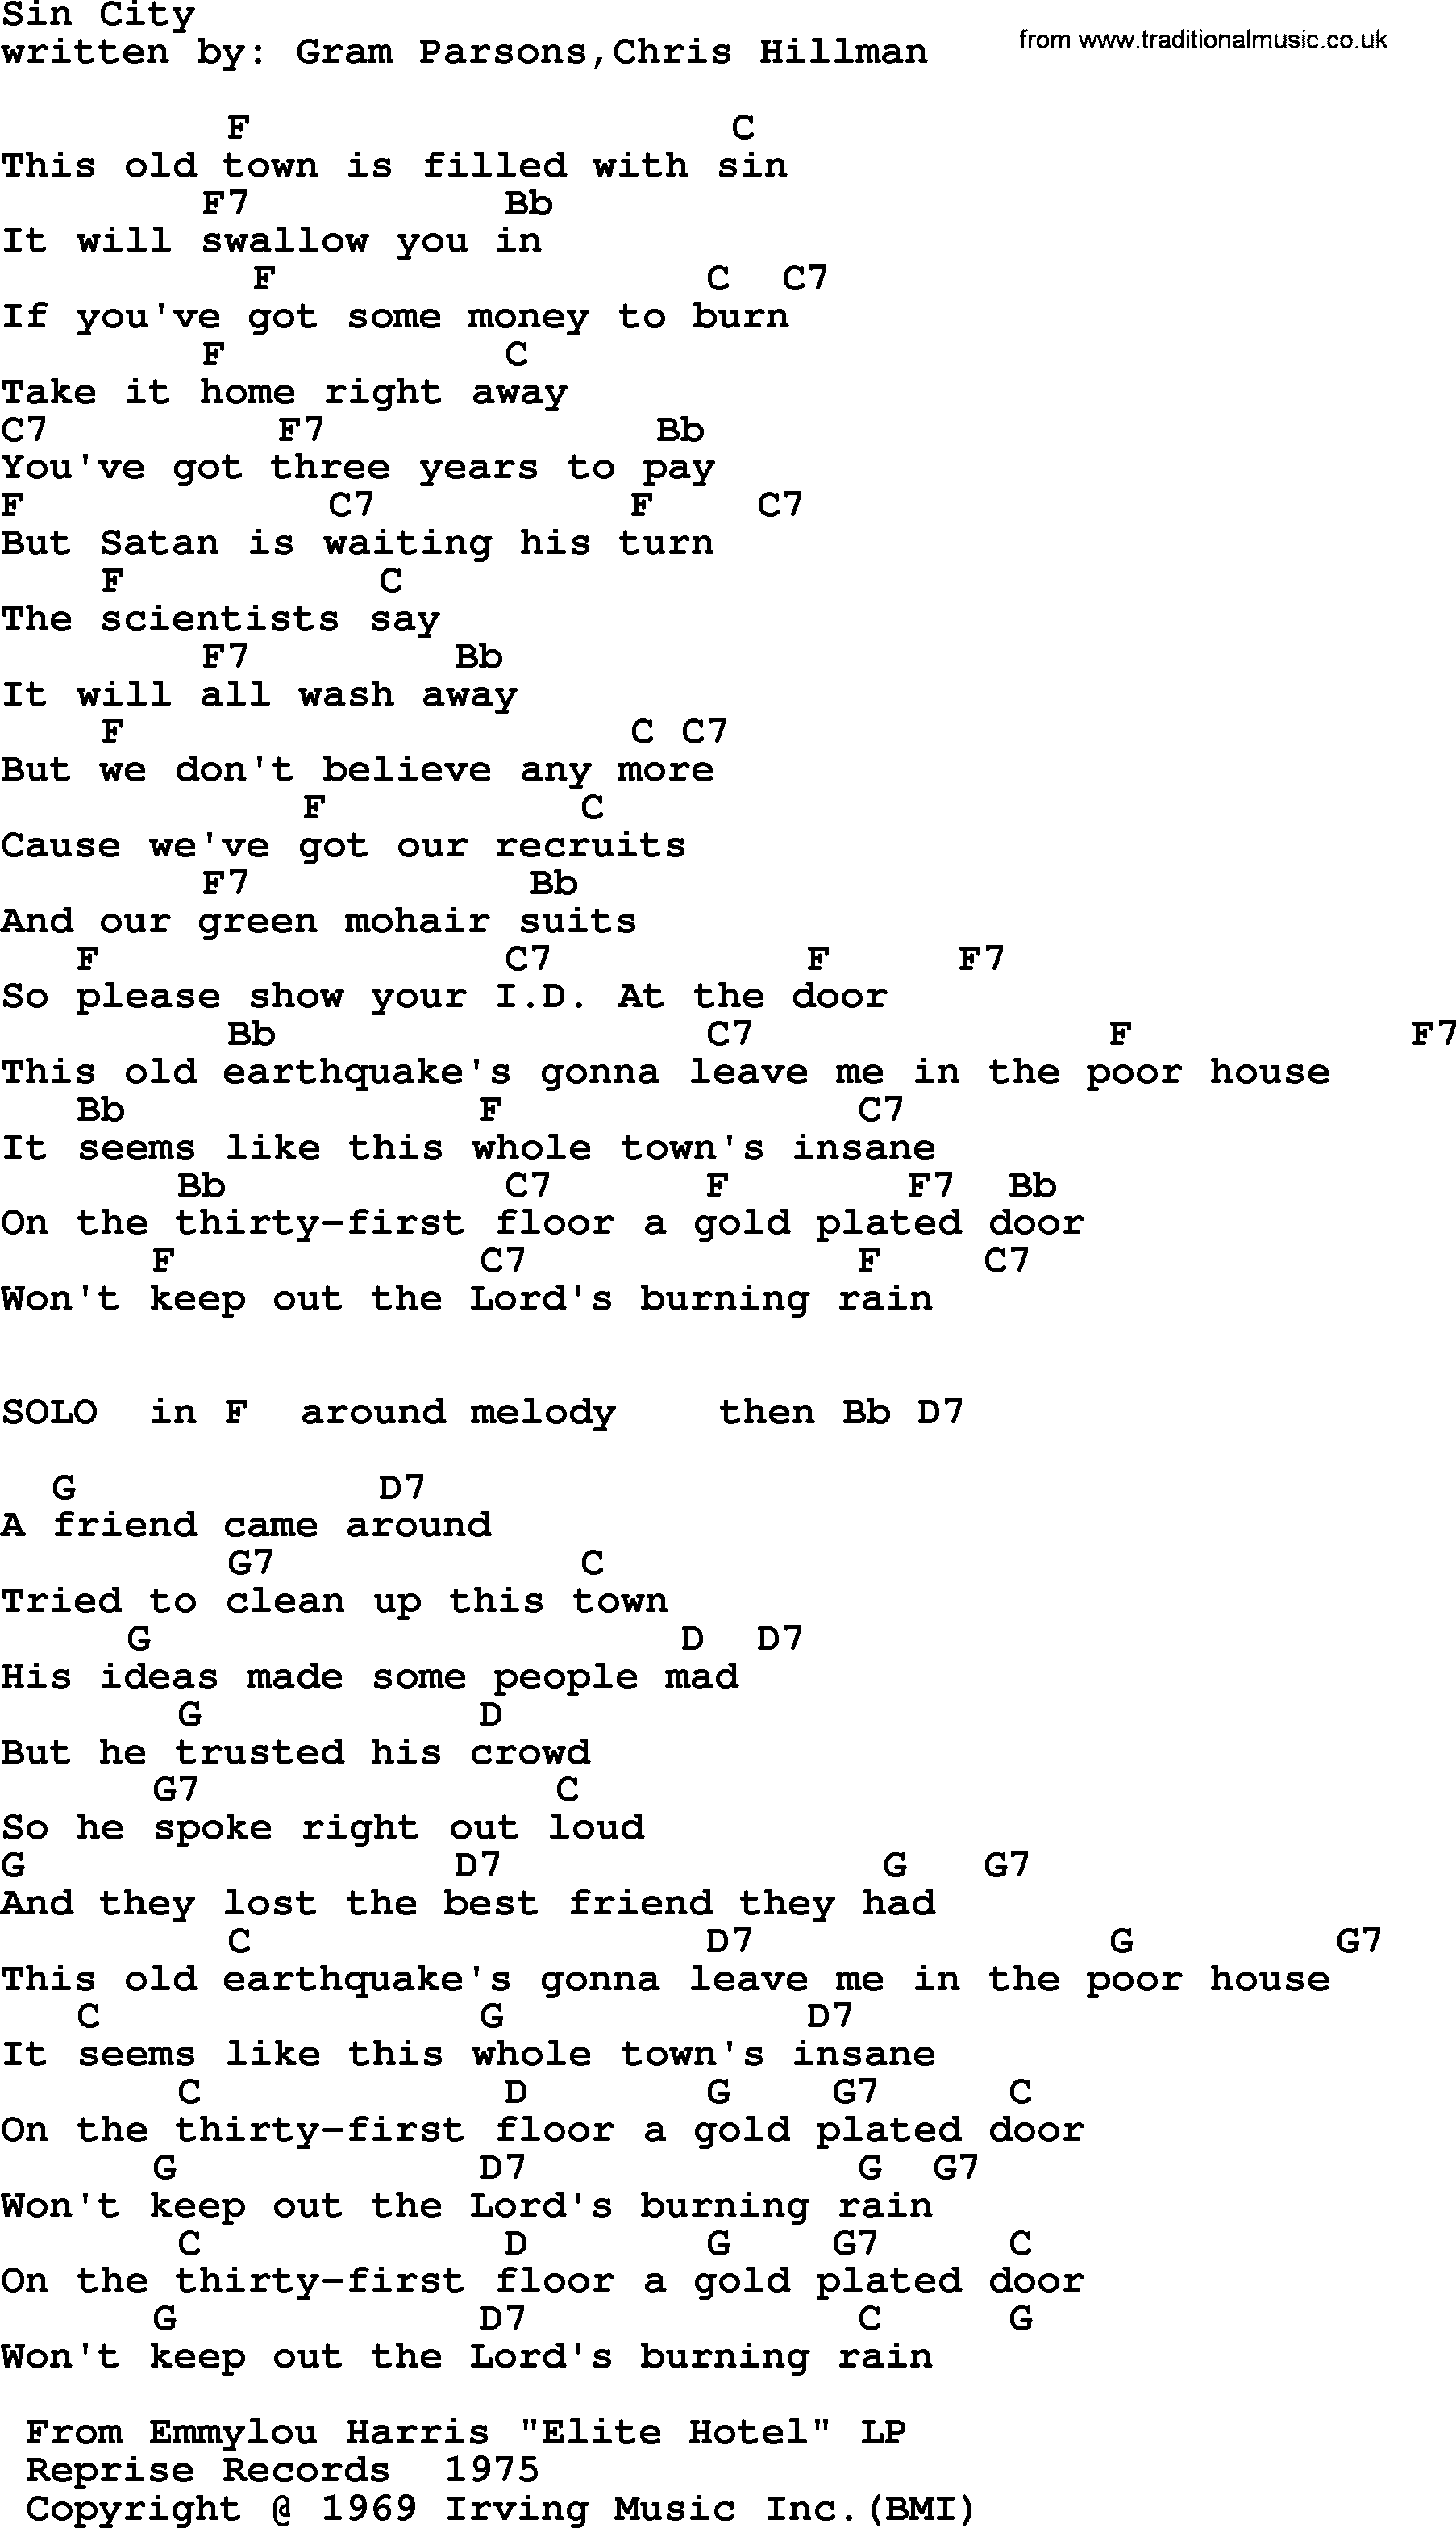 Emmylou Harris song: Sin City lyrics and chords